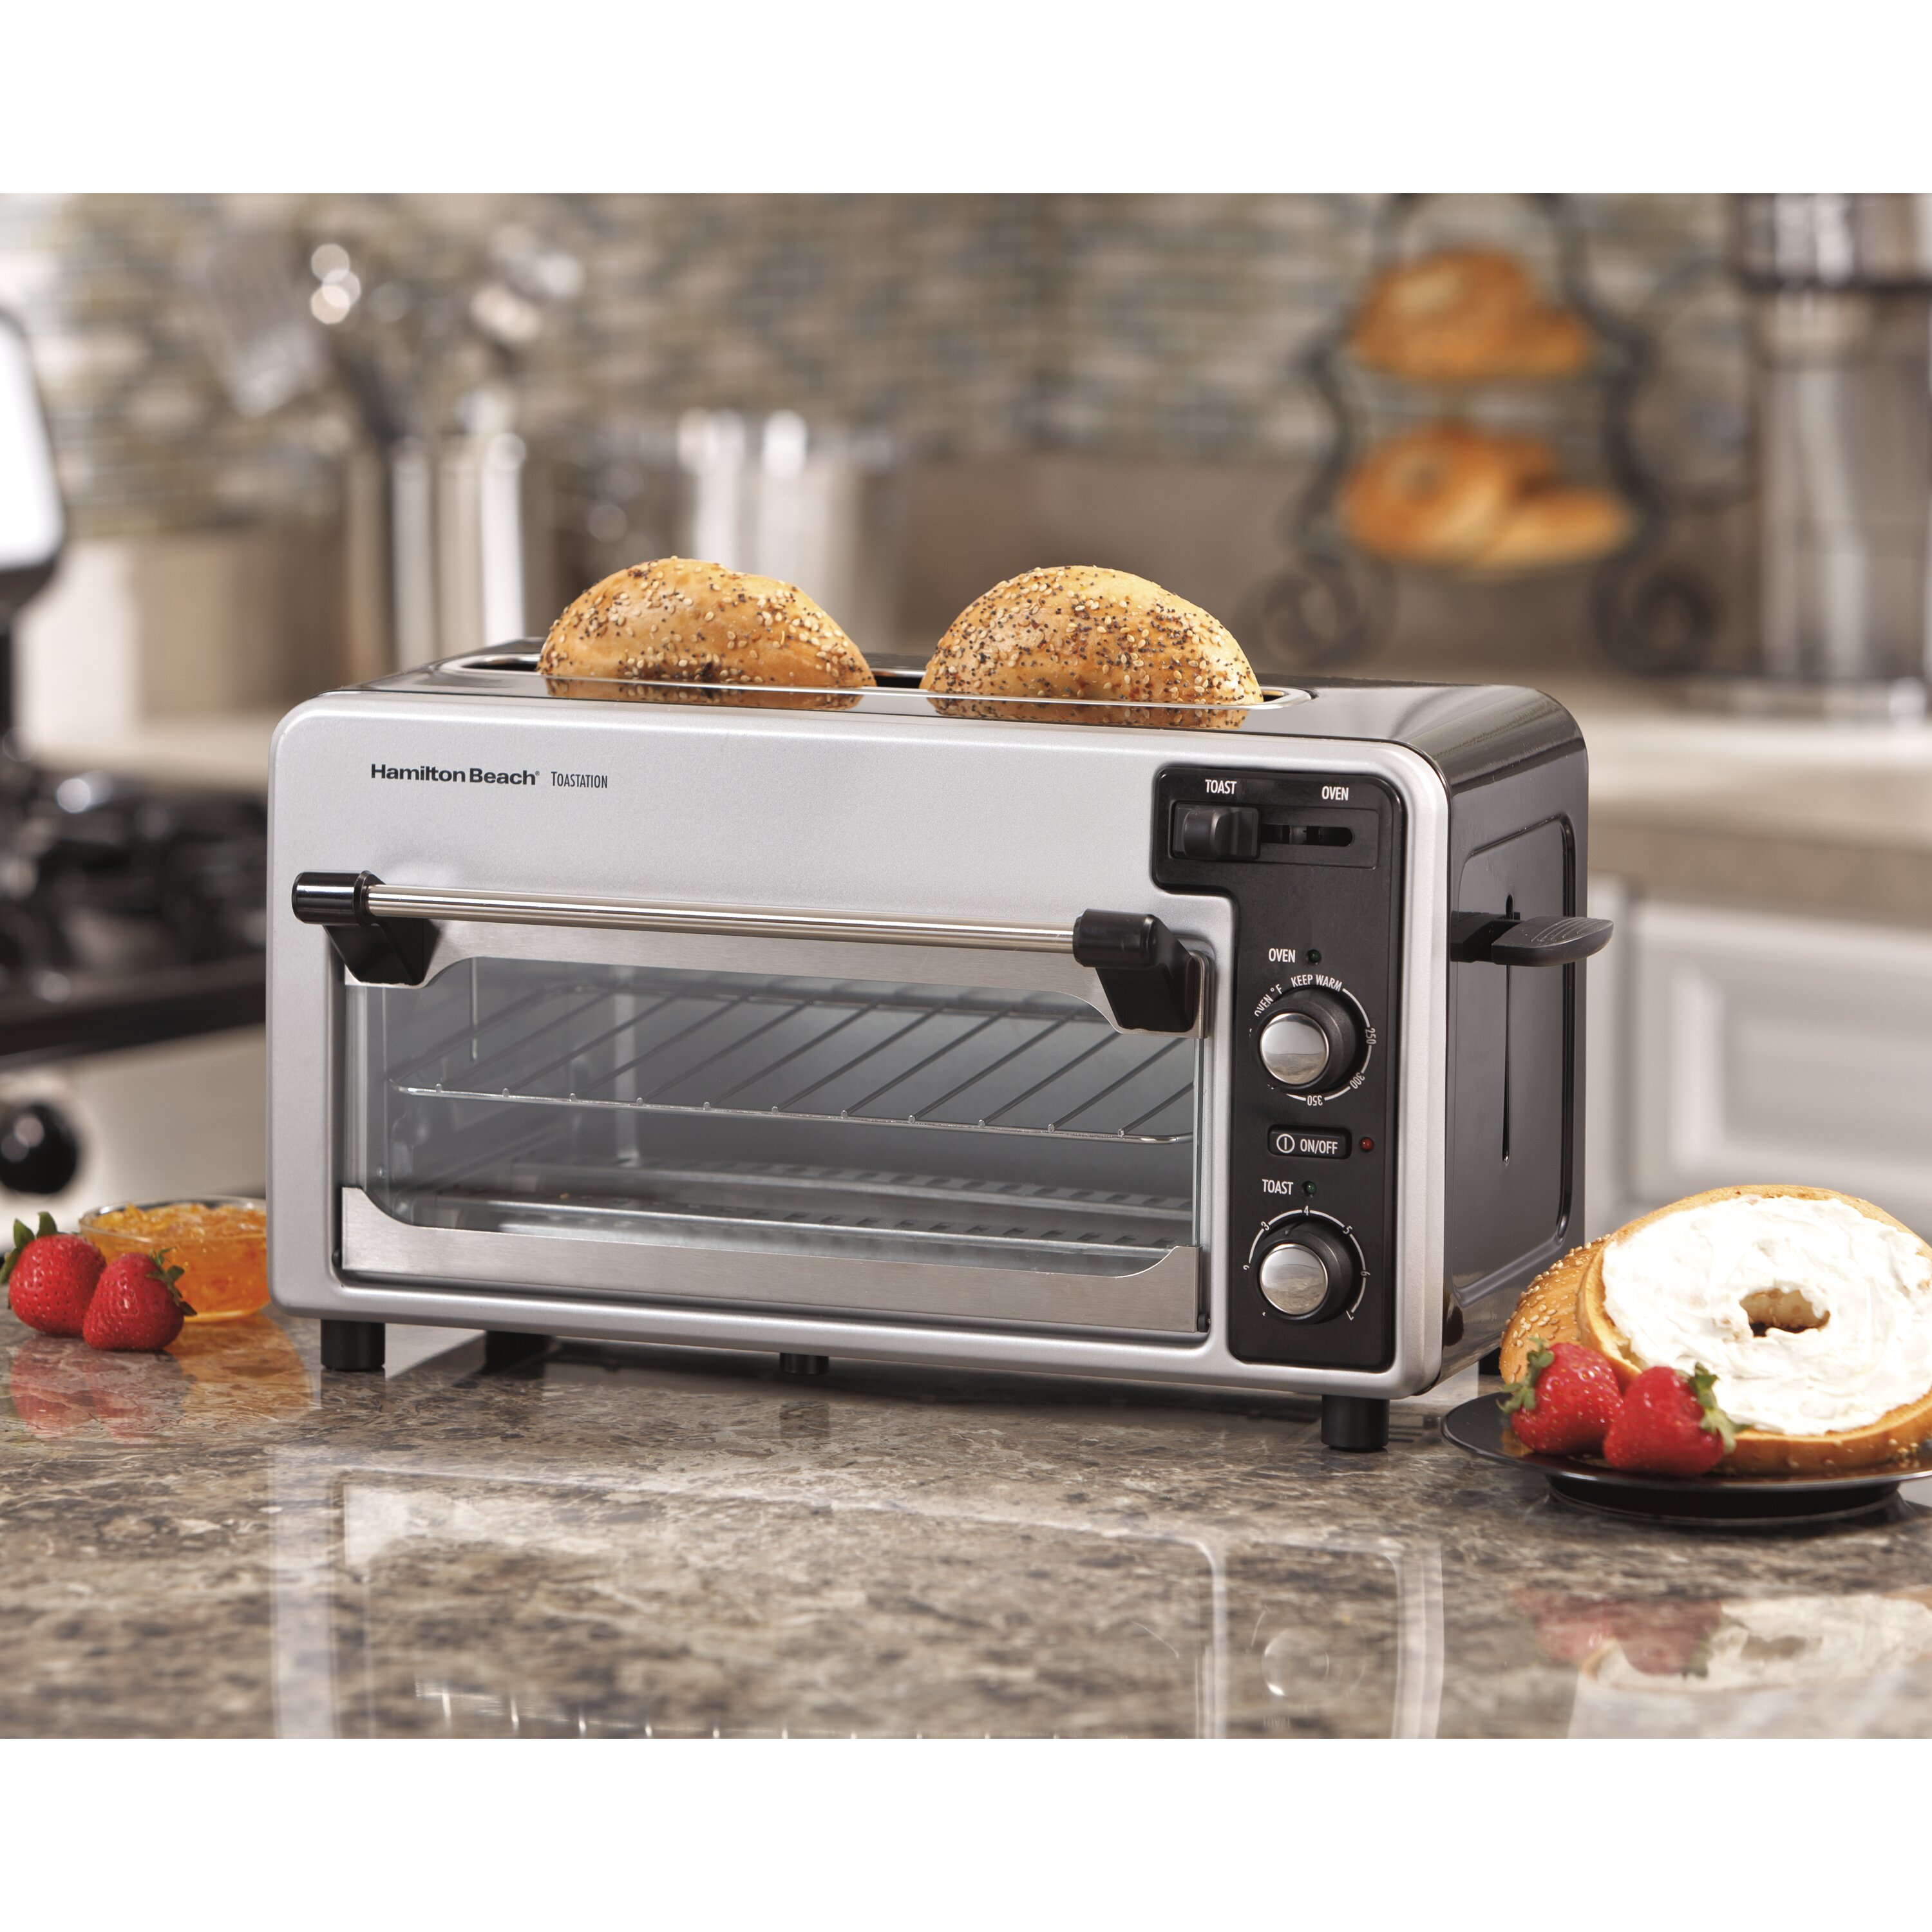 Hamilton Beach Toastation Combination Toaster & Toaster Oven & Reviews